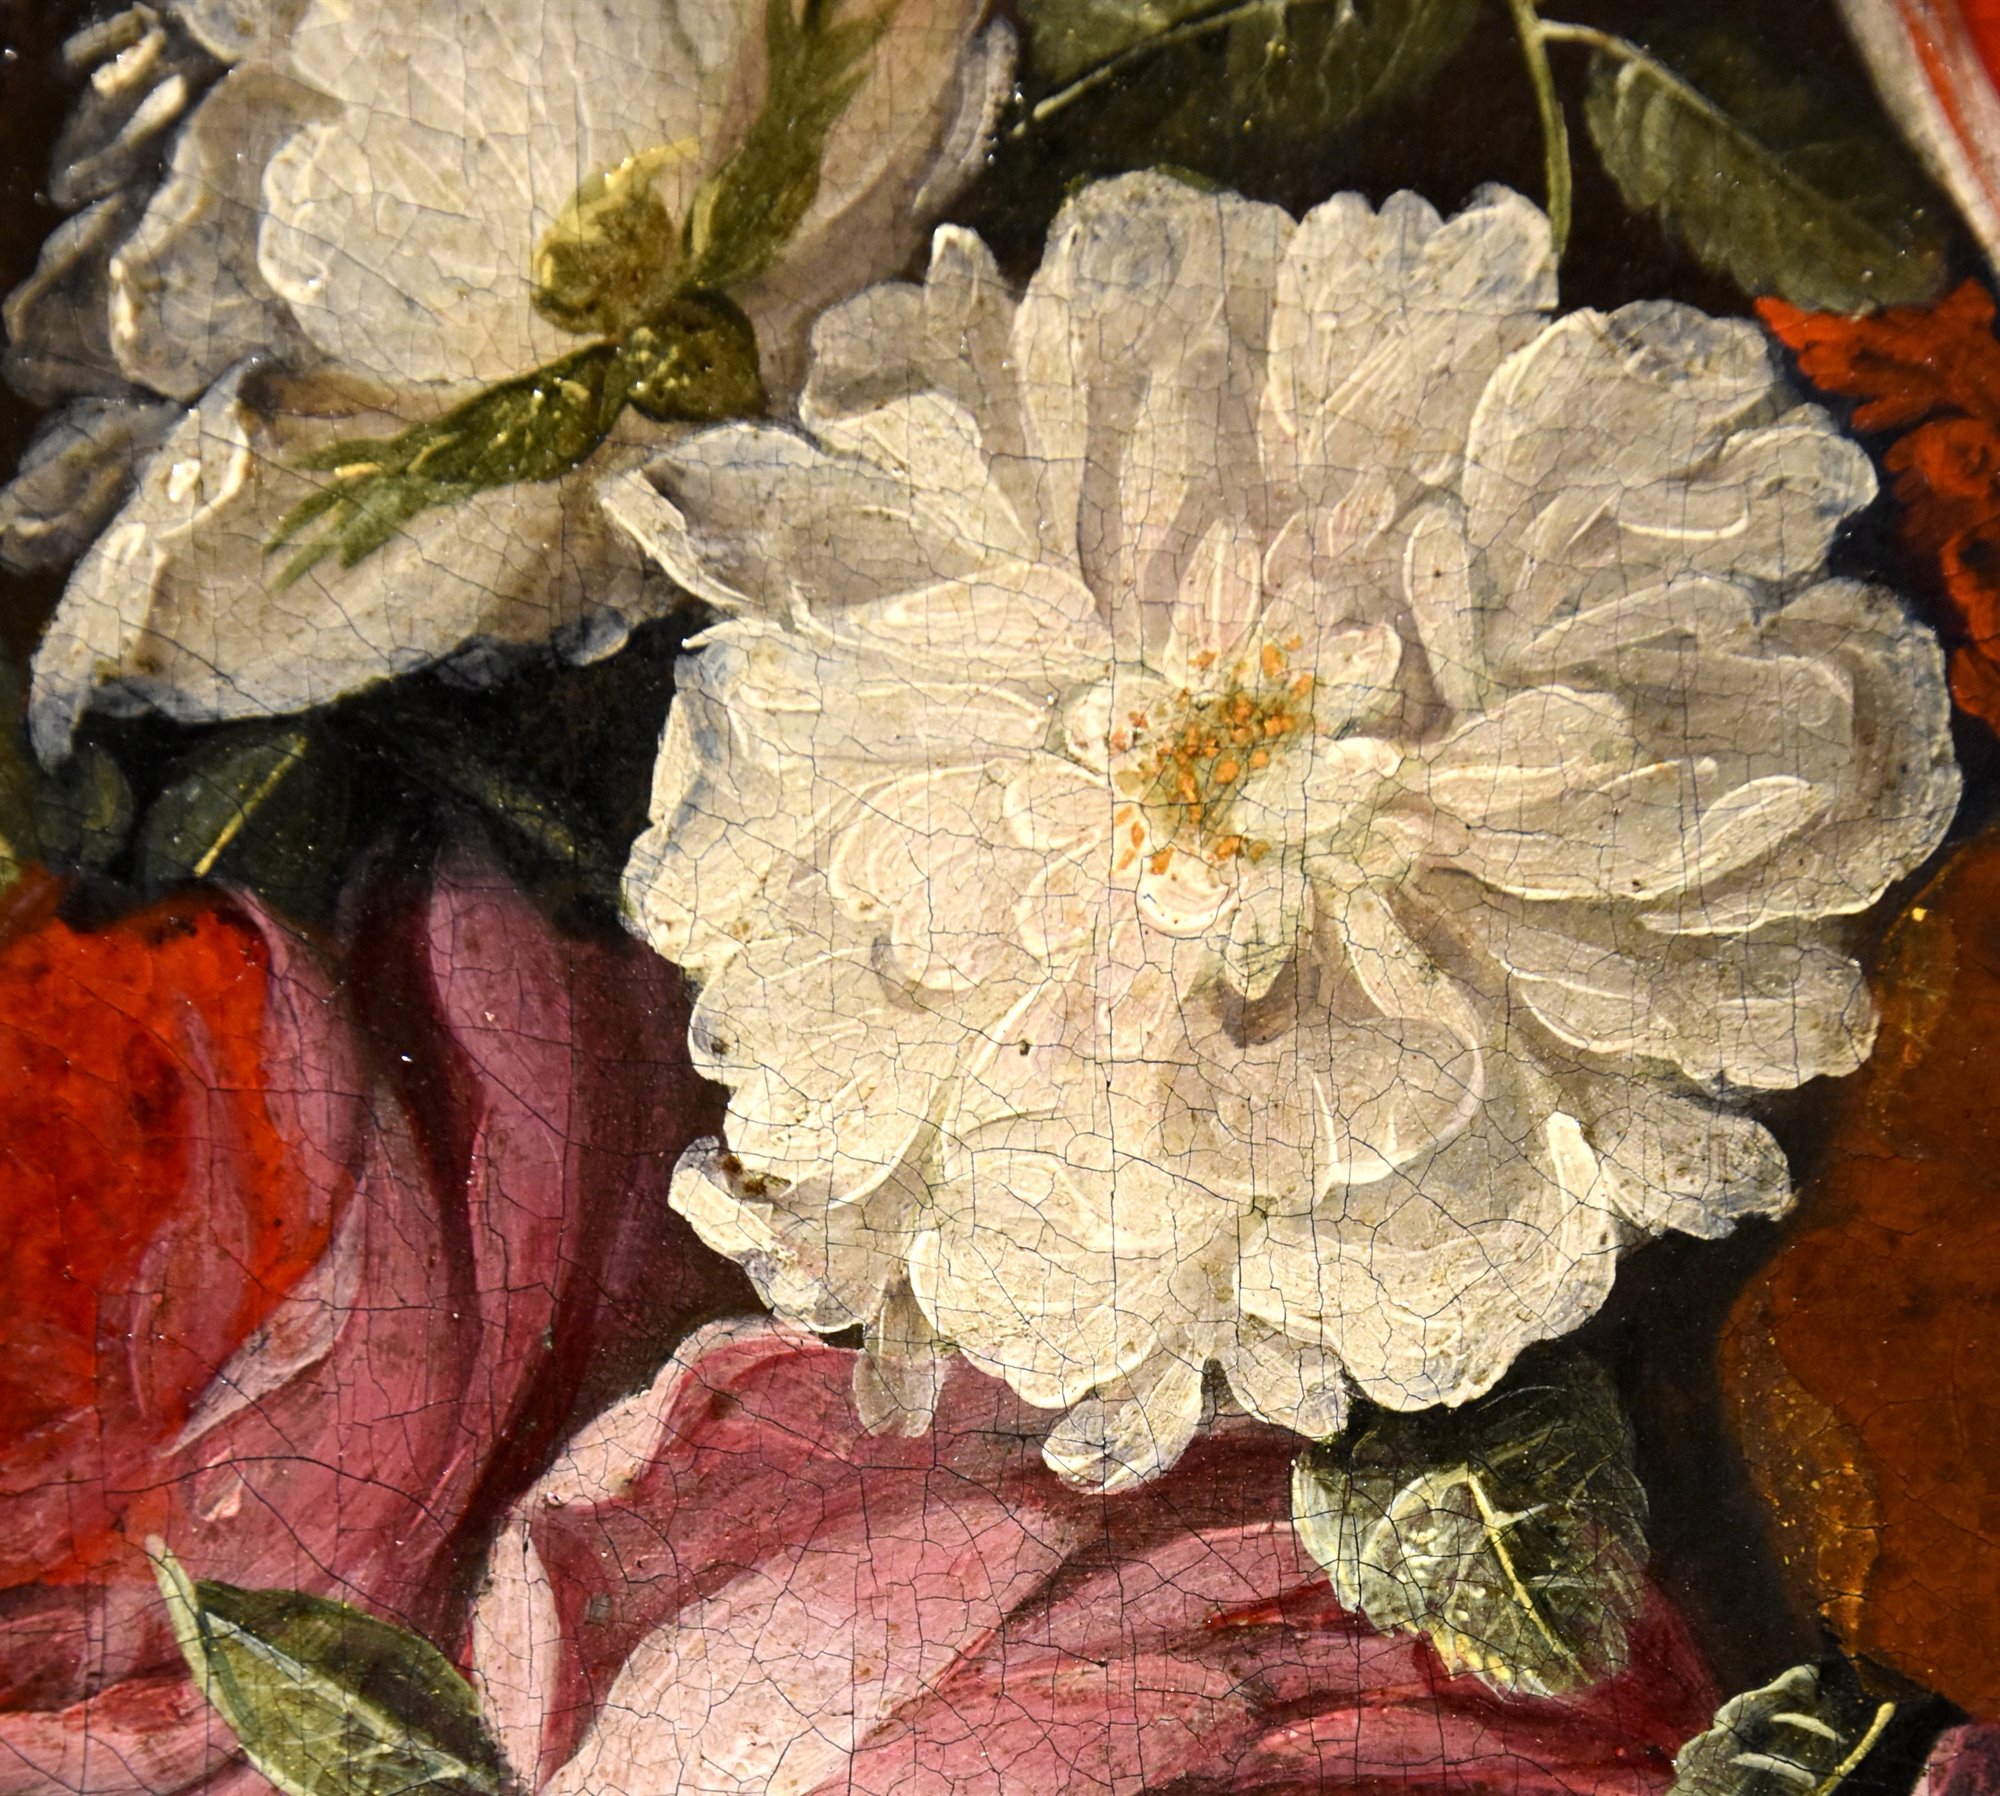 Gaspar Peeter Verbruggen il Giovane (Anversa, 1664 - 1730) attribuito